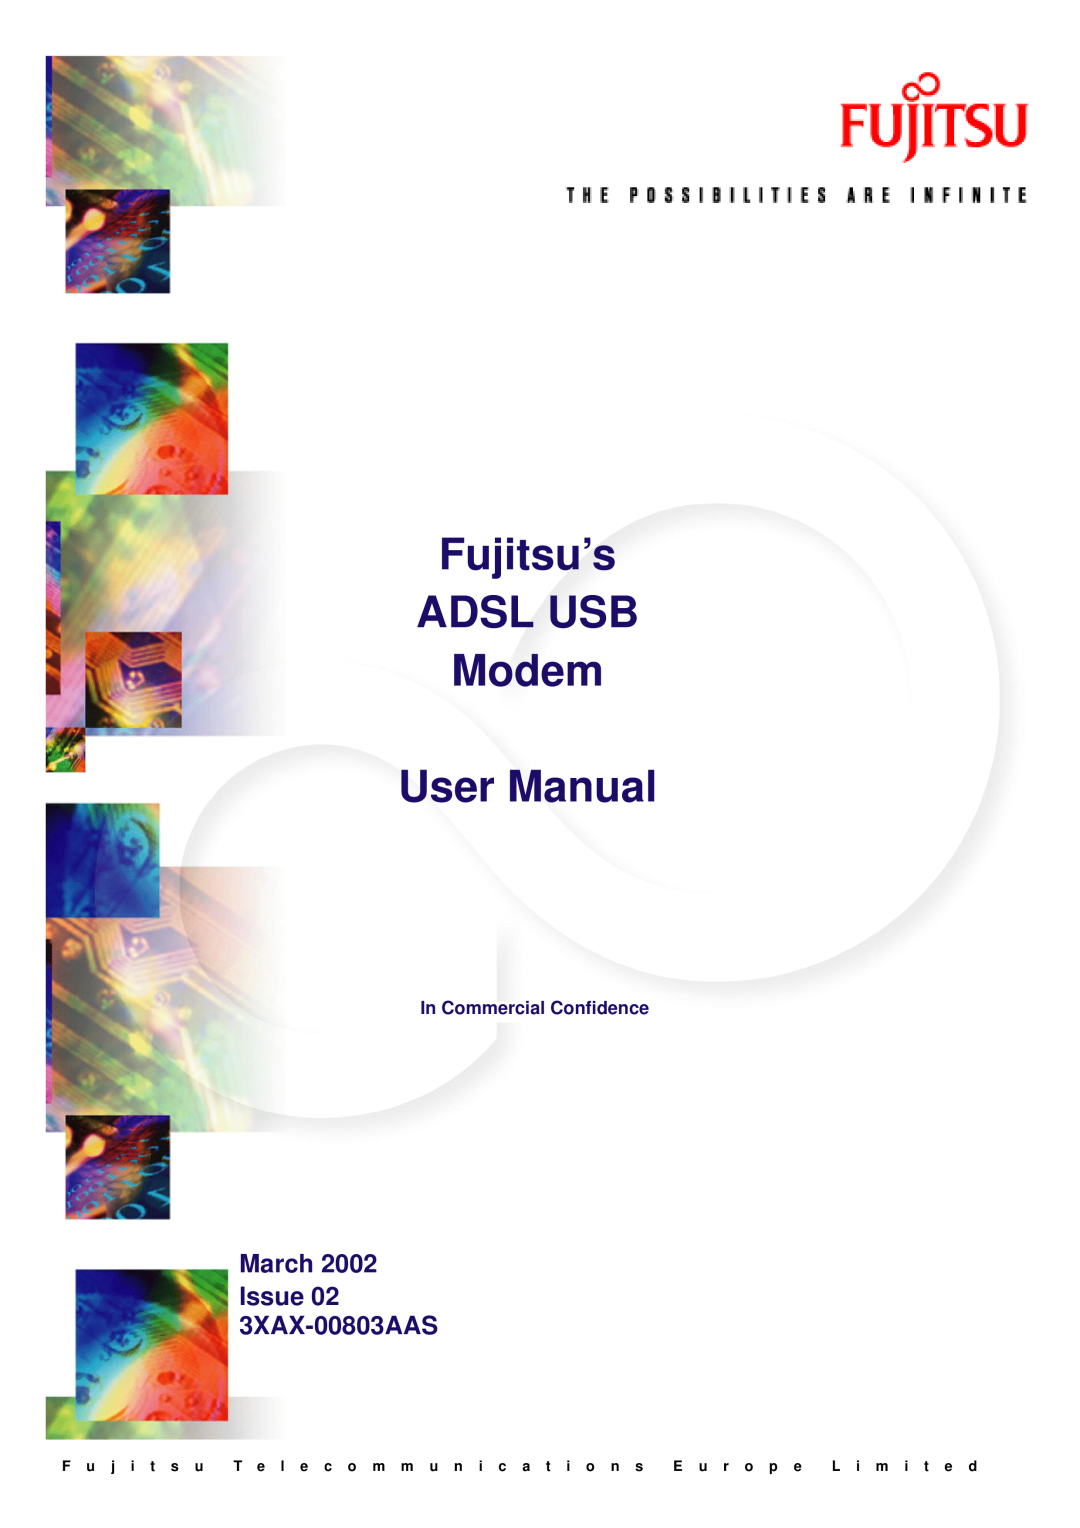 Fujitsu user manual Fujitsu’s ADSL USB Modem User Manual, March 2002 Issue 02 3XAX-00803AAS, In Commercial Confidence 